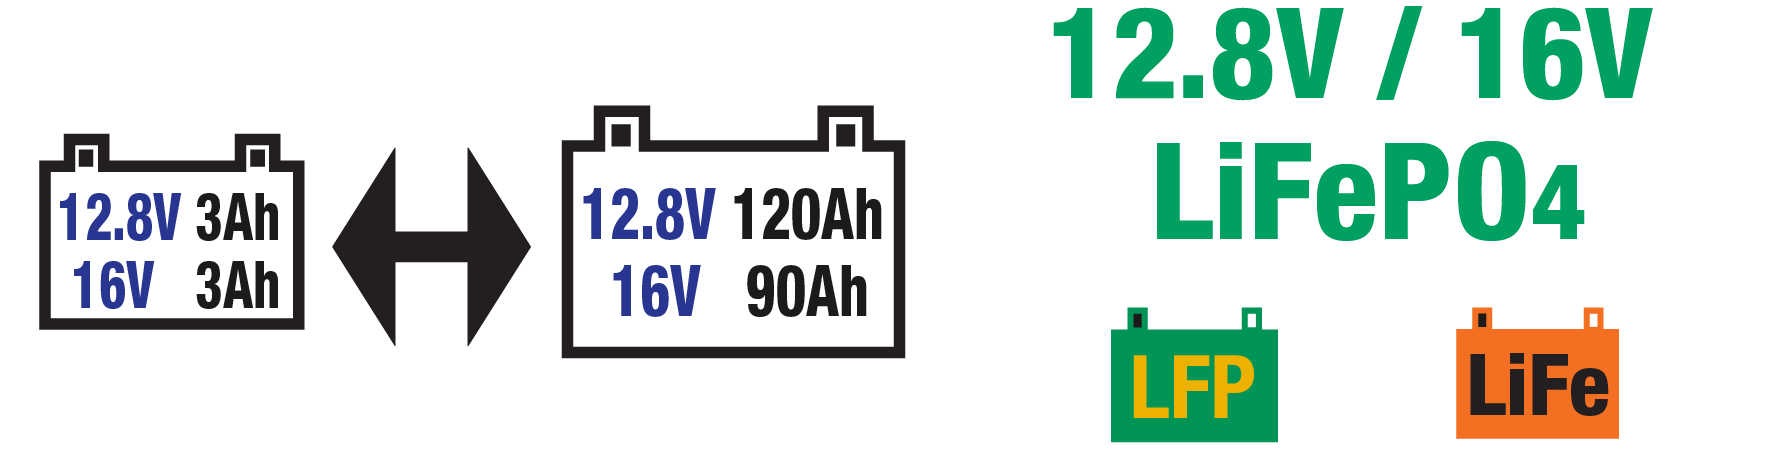 De OptiMate Lithium LFP Select is ideaal voor 12.8V/16V LiFeP04-/LFP-accu’s